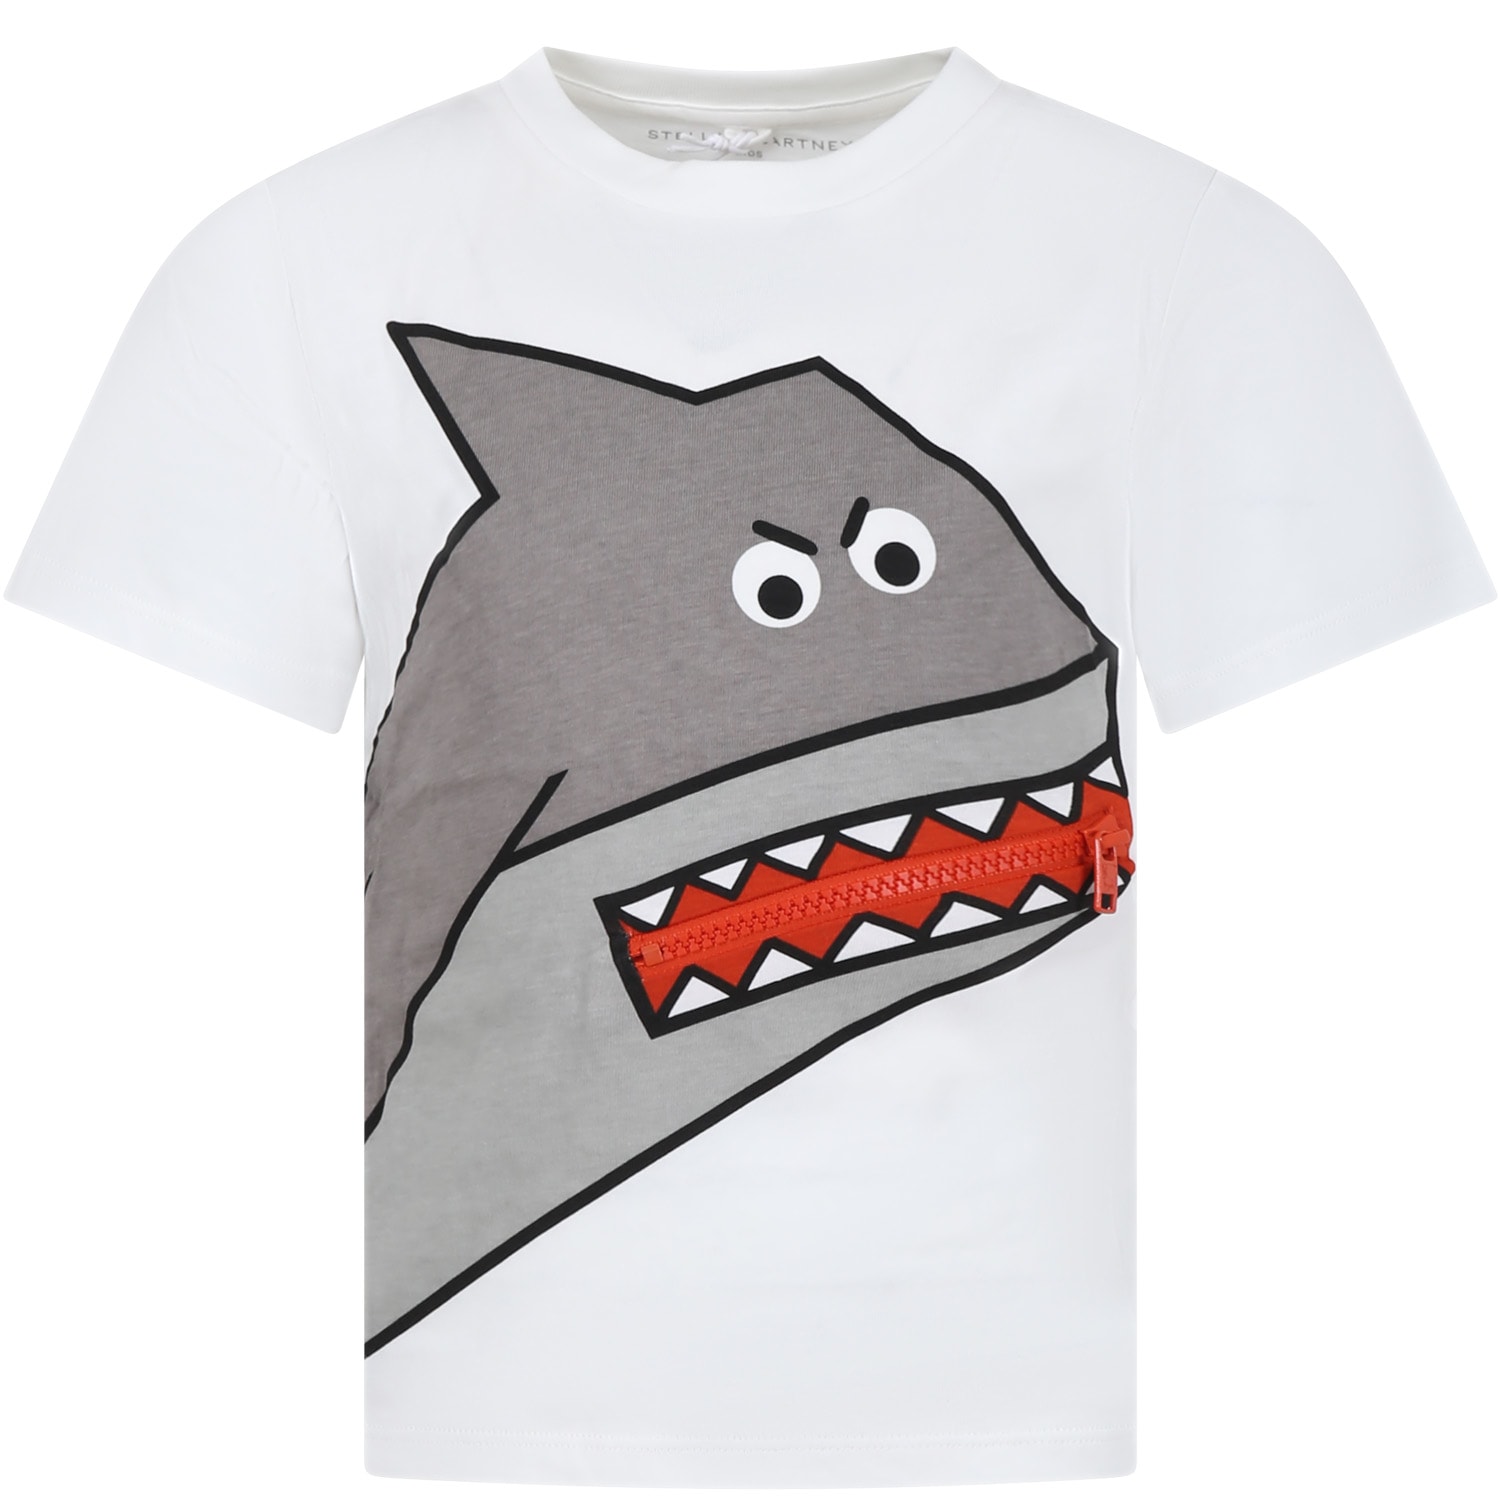 Stella McCartney White T-shirt For Boy With Shark